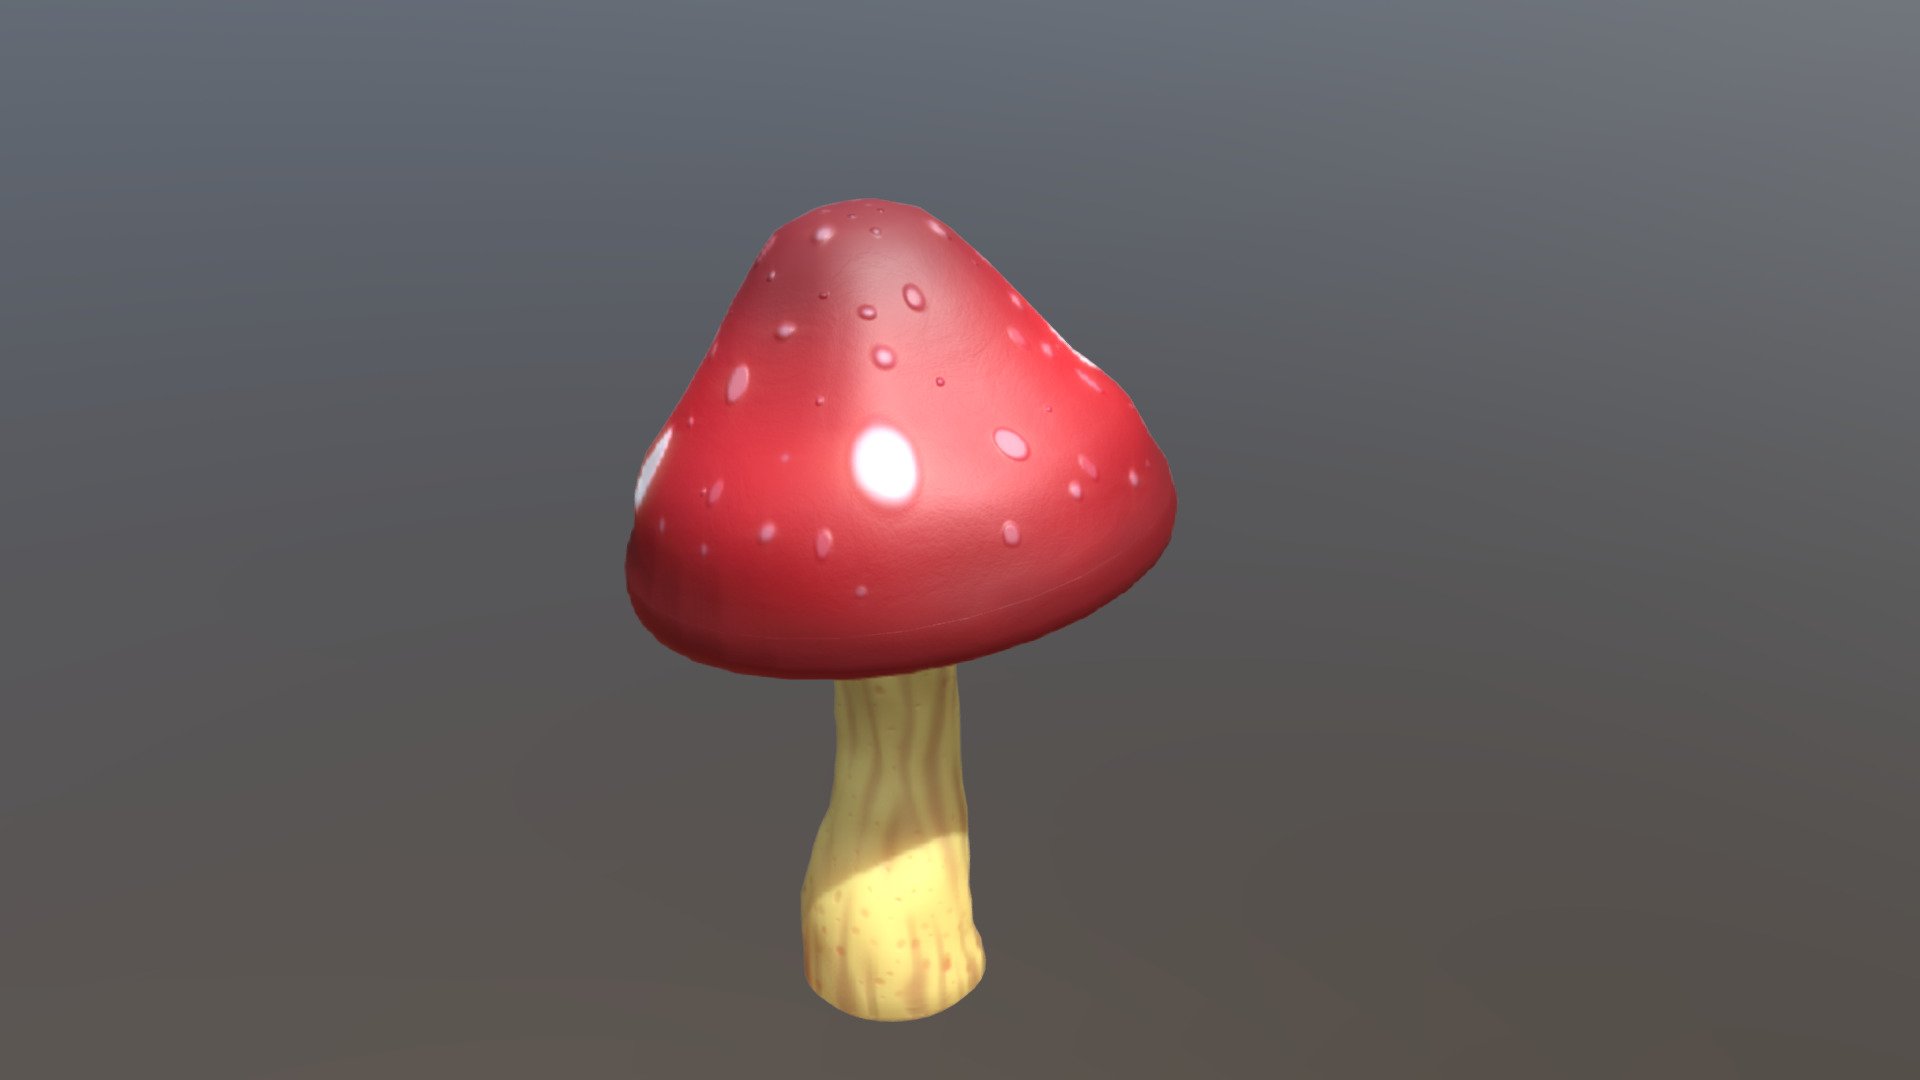 A simple cartoon mushroom - Stylized cartoony mushroom - 3D model by ¡Jacques (@iJacques) 3d model